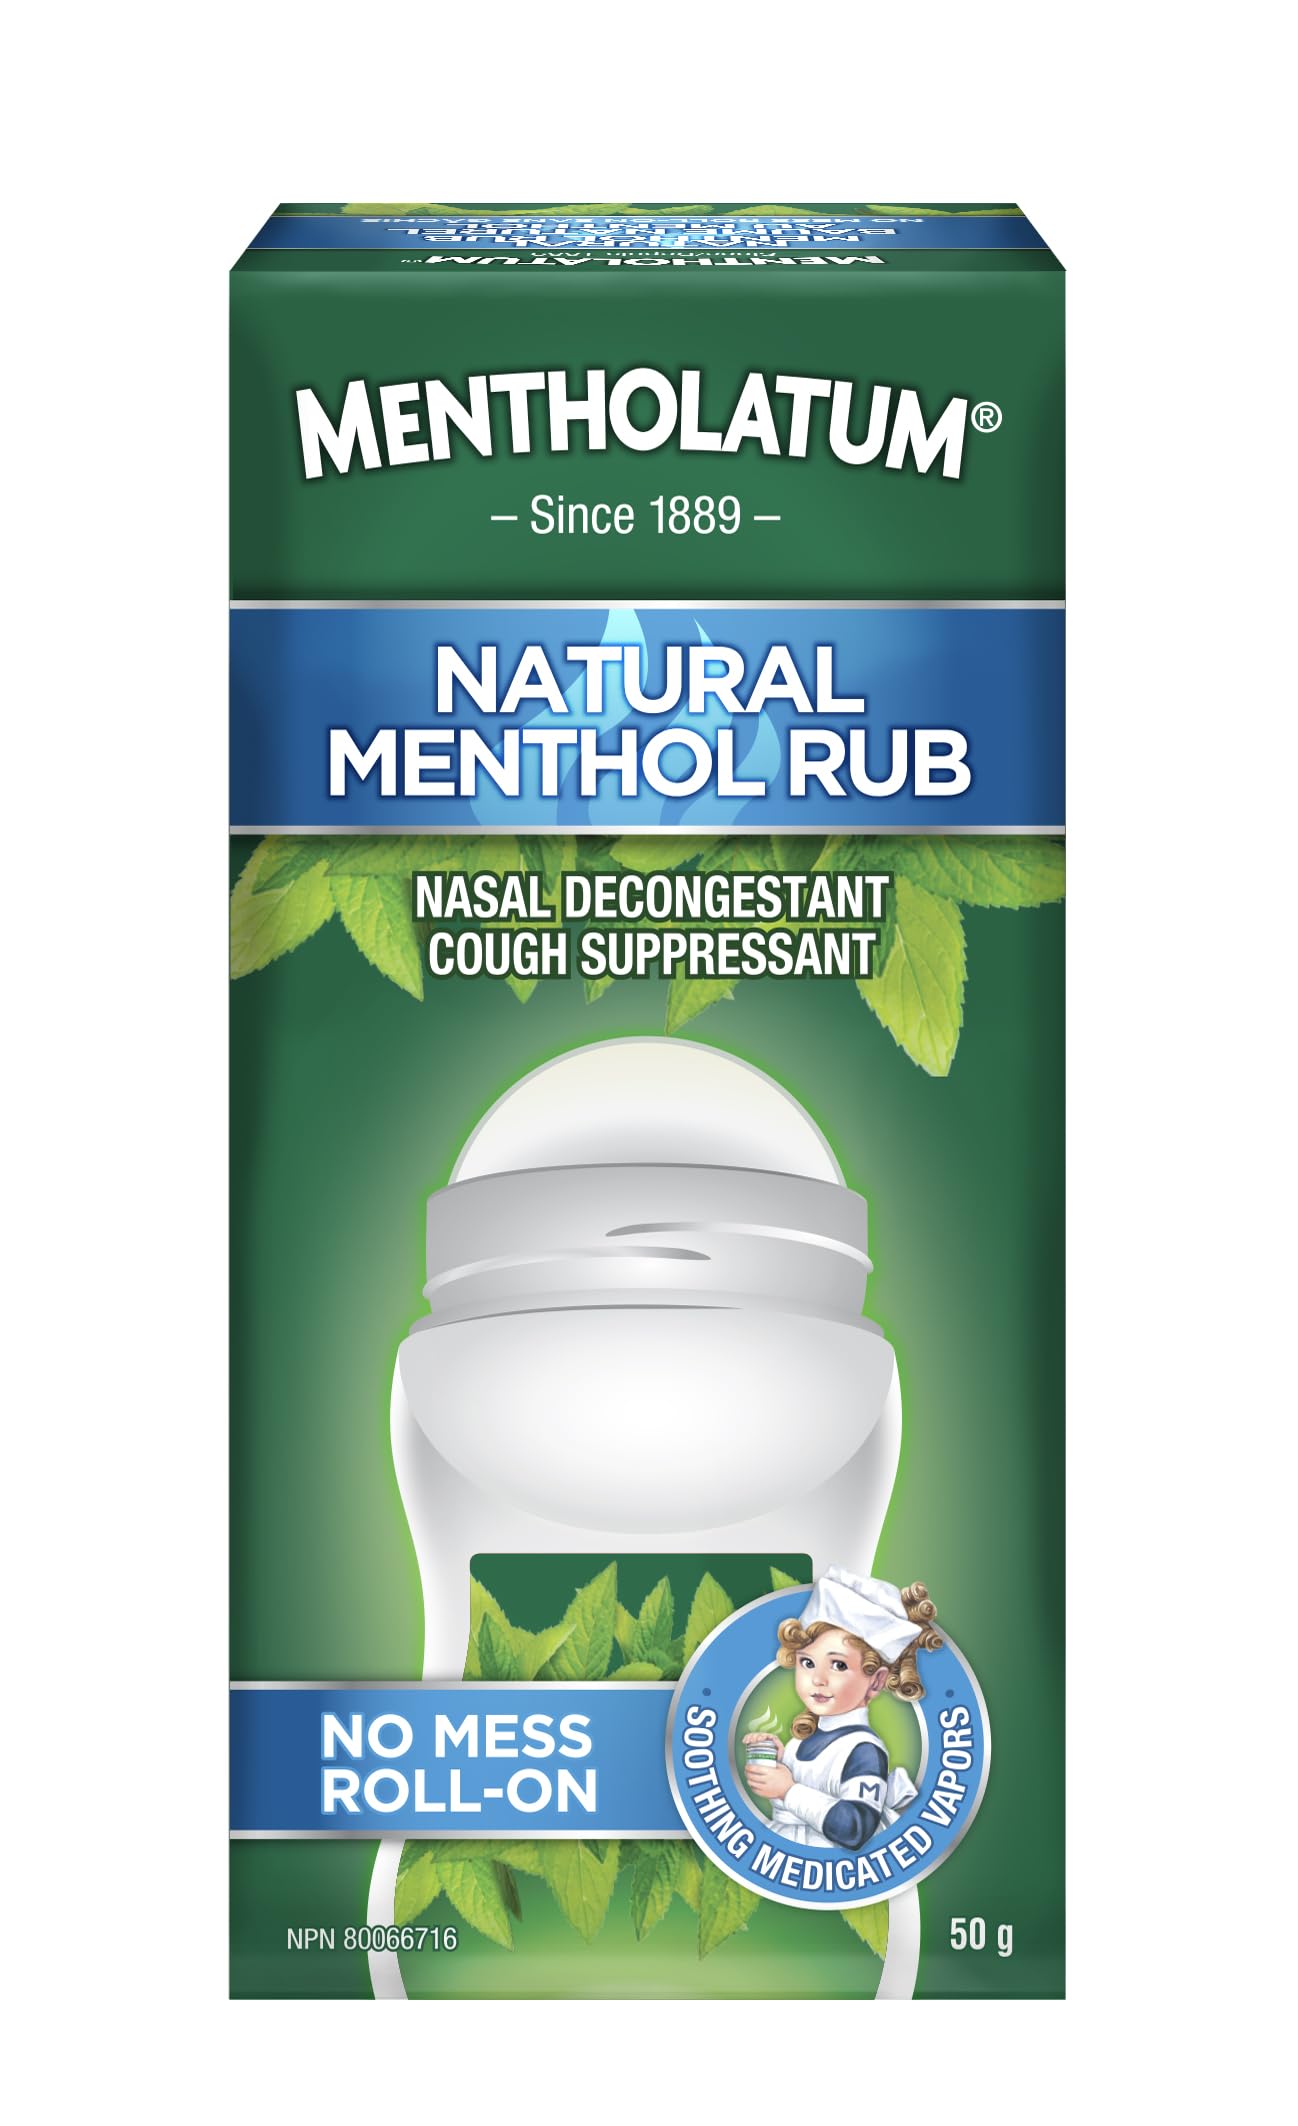 Mentholatum No Mess Natural Menthol Rub Roll On, Vapourizing Rub, Cough Suppressant & Nasal Decongestant, 50g